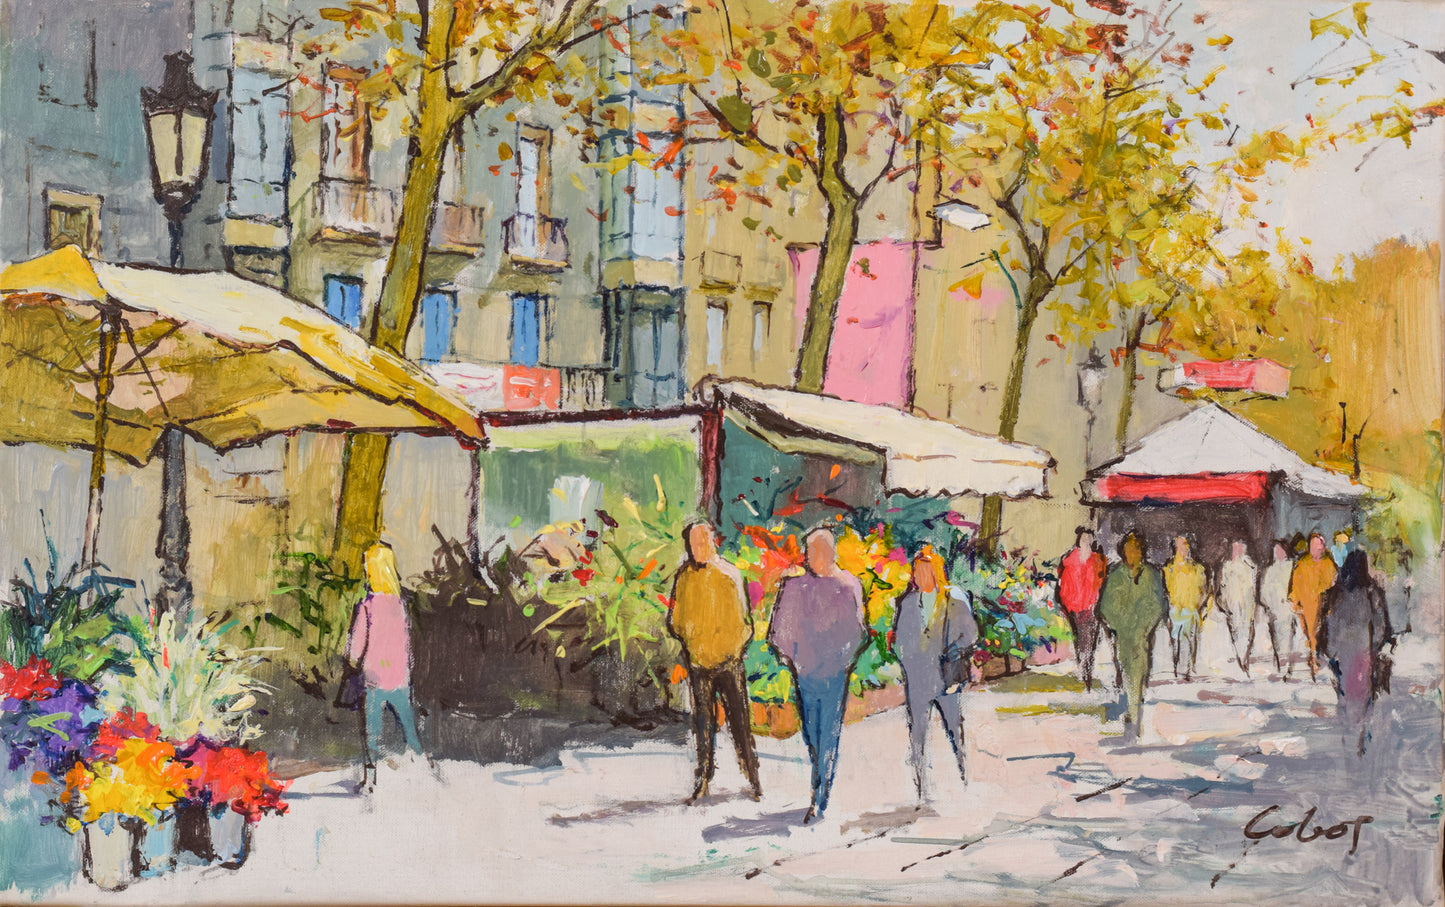 Vibrant Market Scene - Oil on Canvas